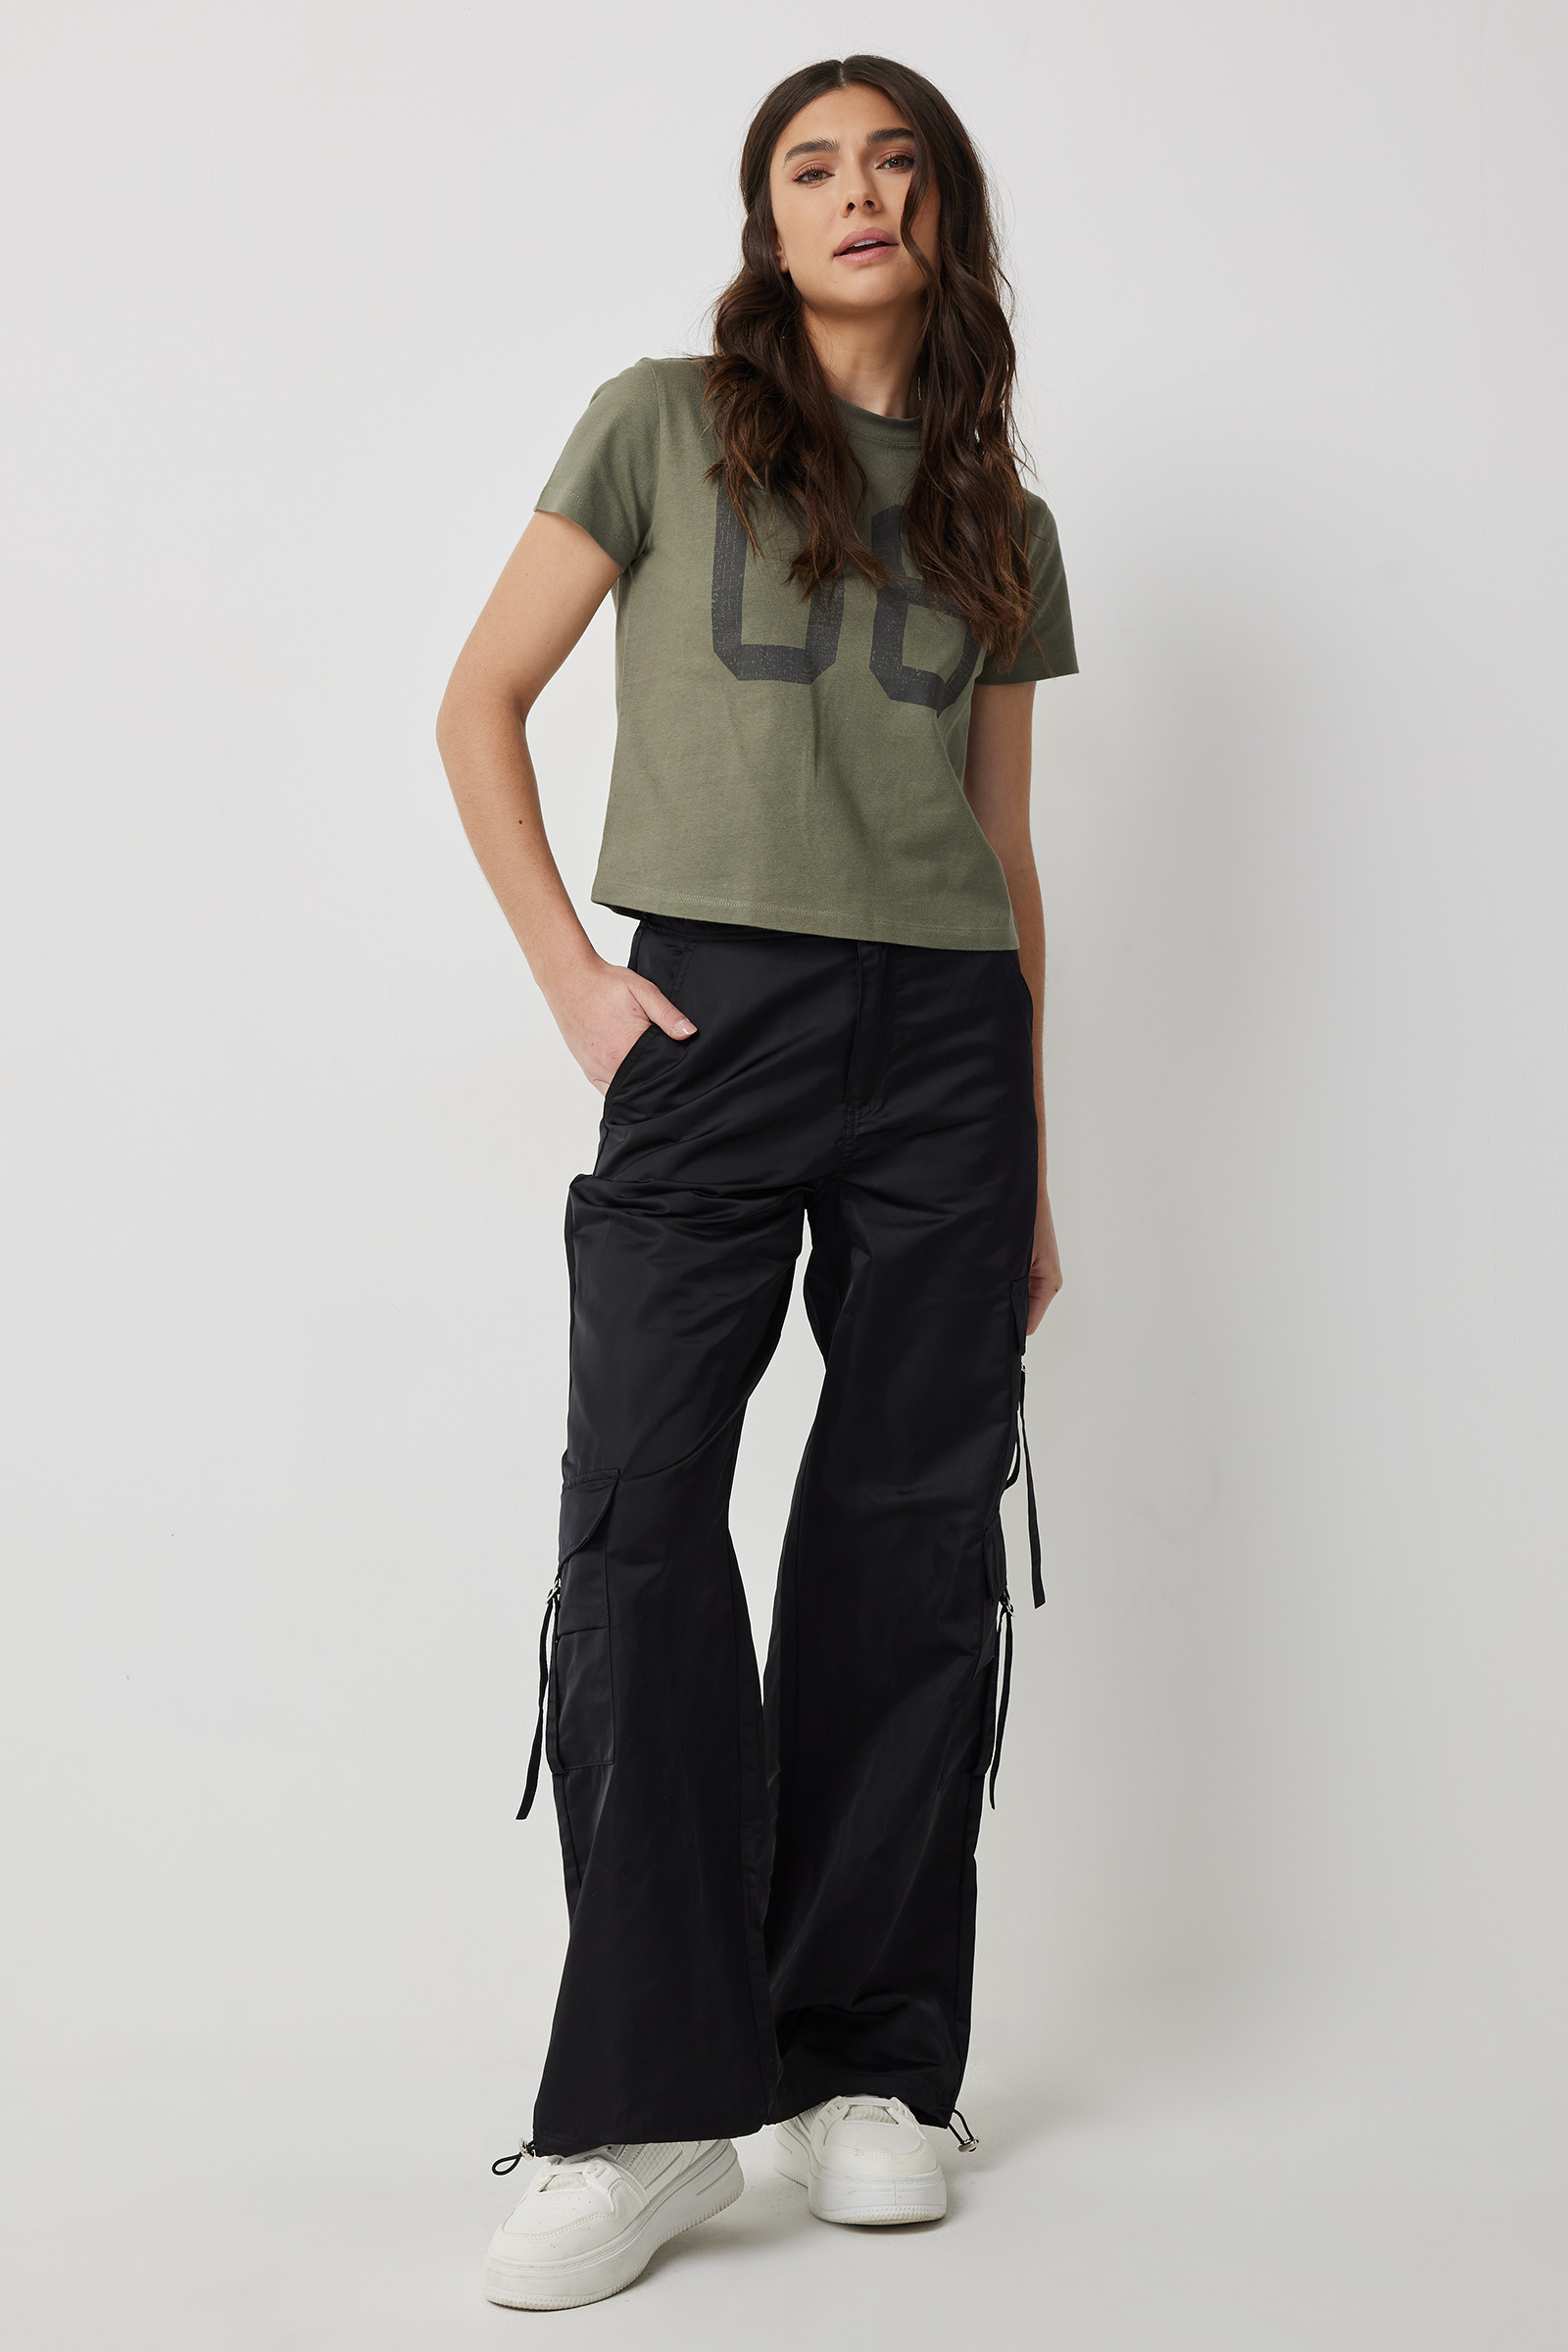 Ardene Multi-Pocket Parachute Pants in Black | Size | Polyester